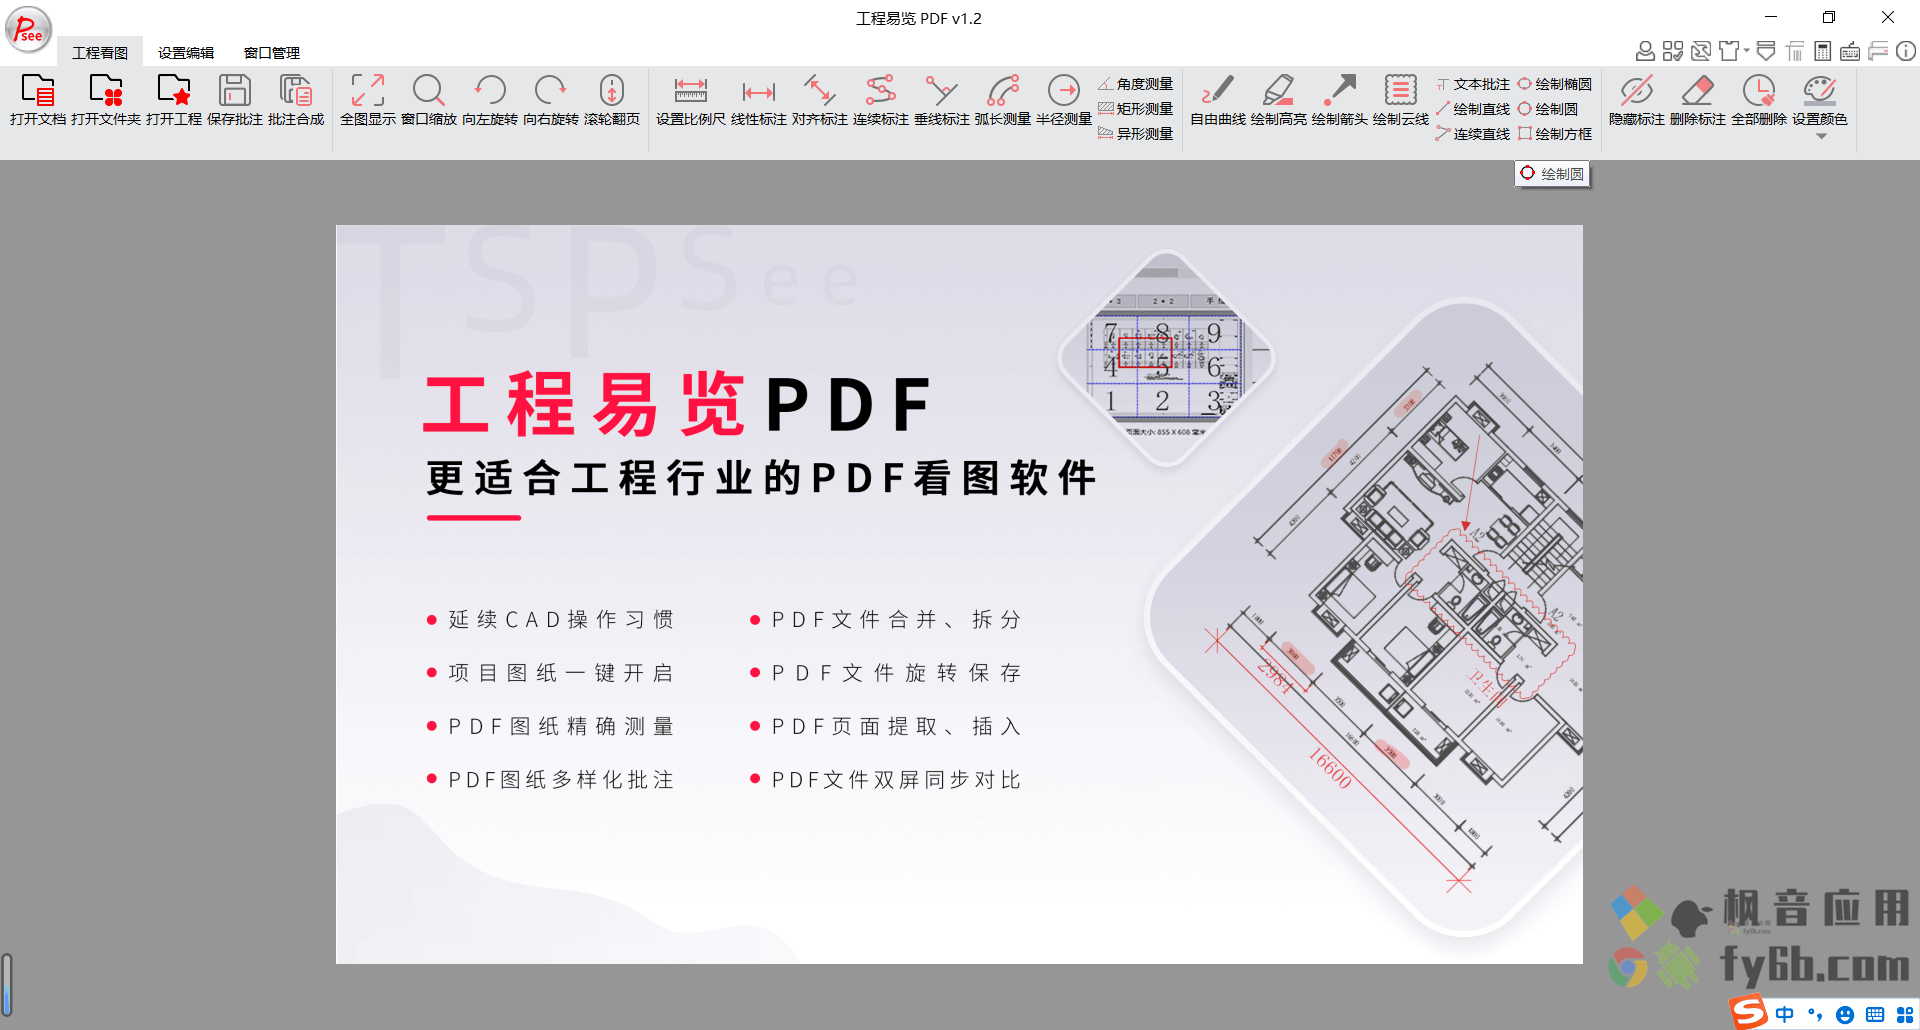 Windows 工程易览PDF_v1.2